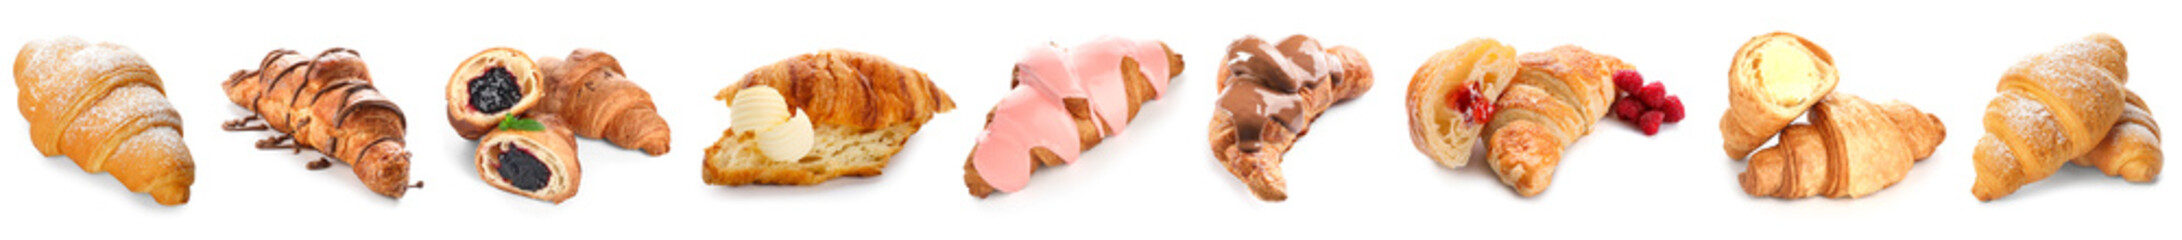 Set of sweet croissants on white background